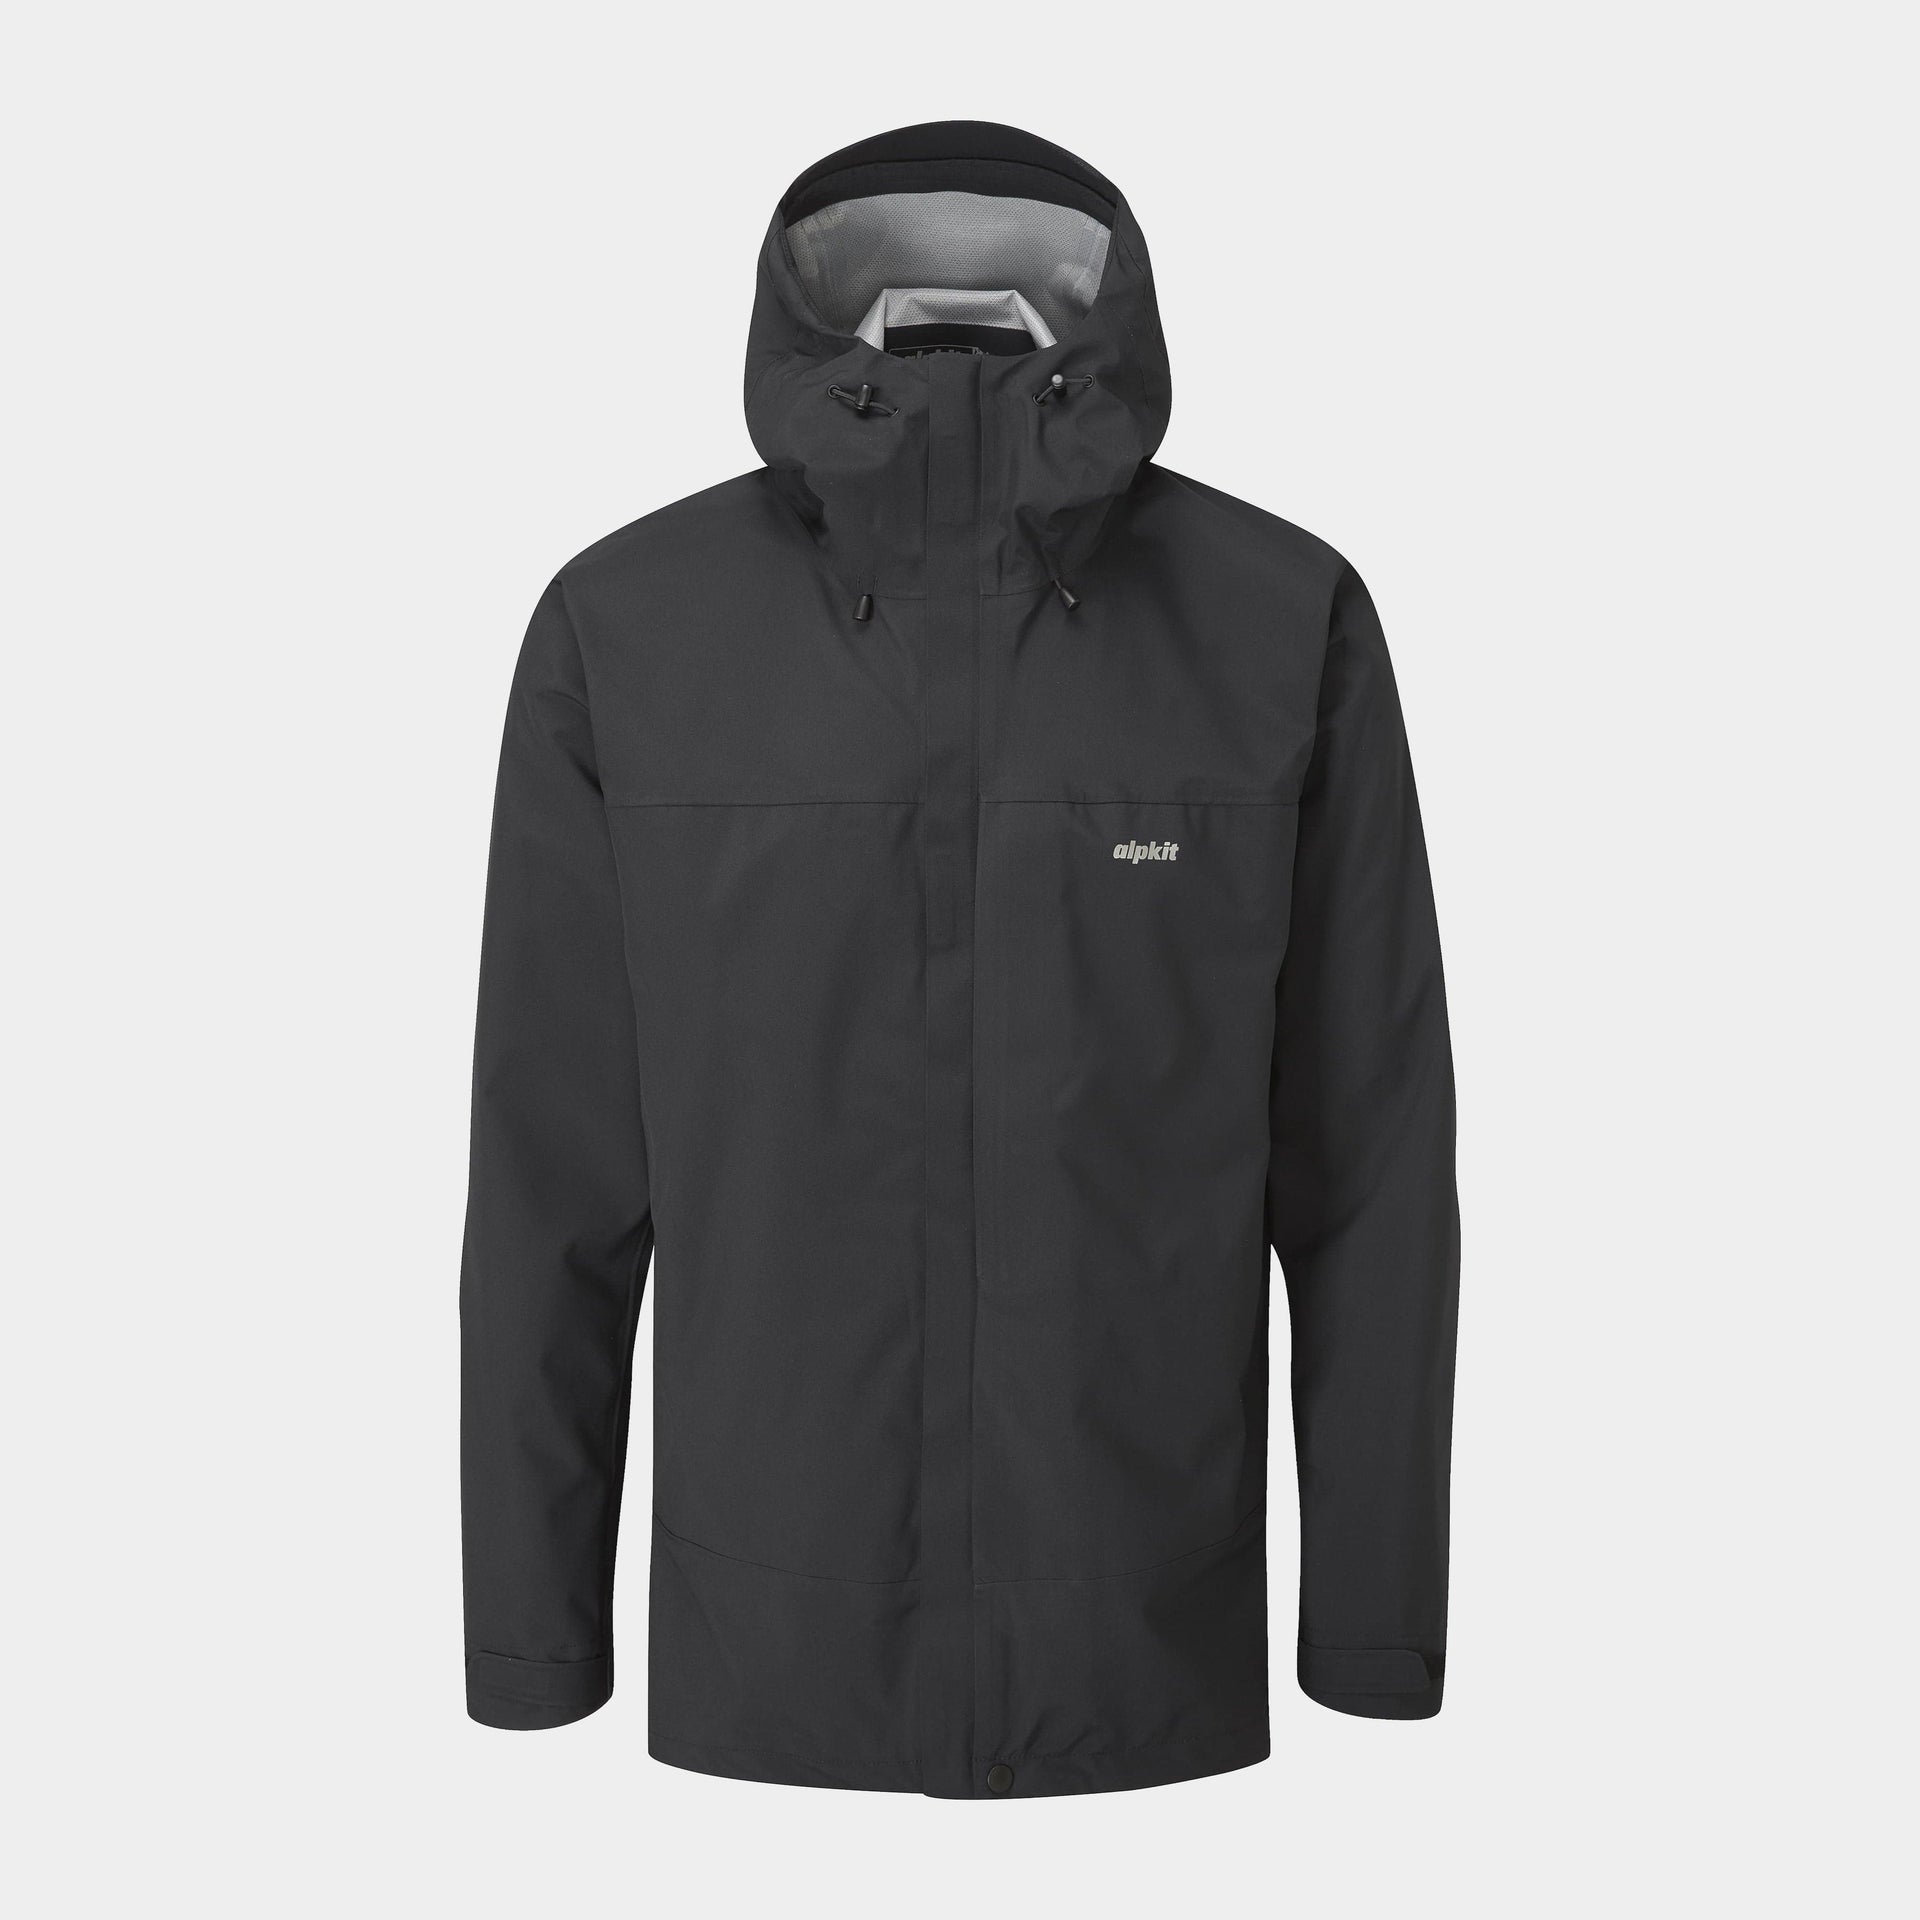 Fortitude | Men's Hillwalking Waterproof Jacket | Alpkit